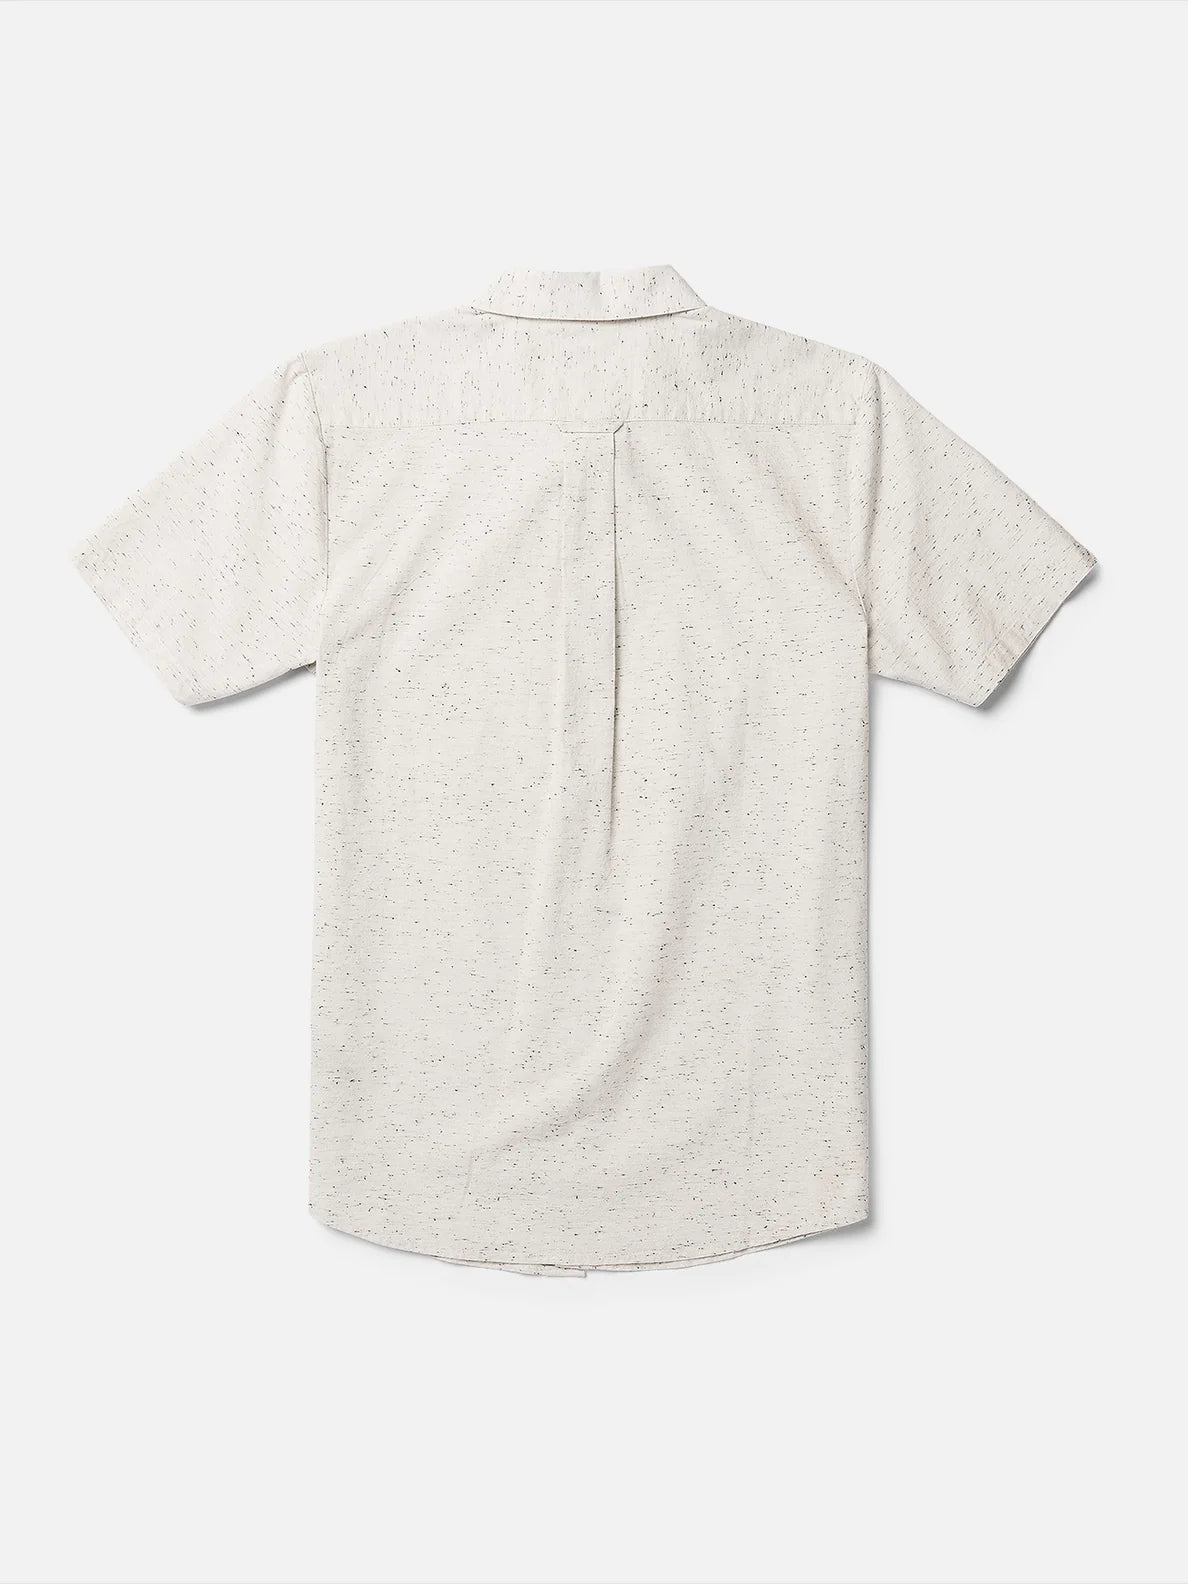 Volcom Date Knight Short Sleeve Shirt - Off White